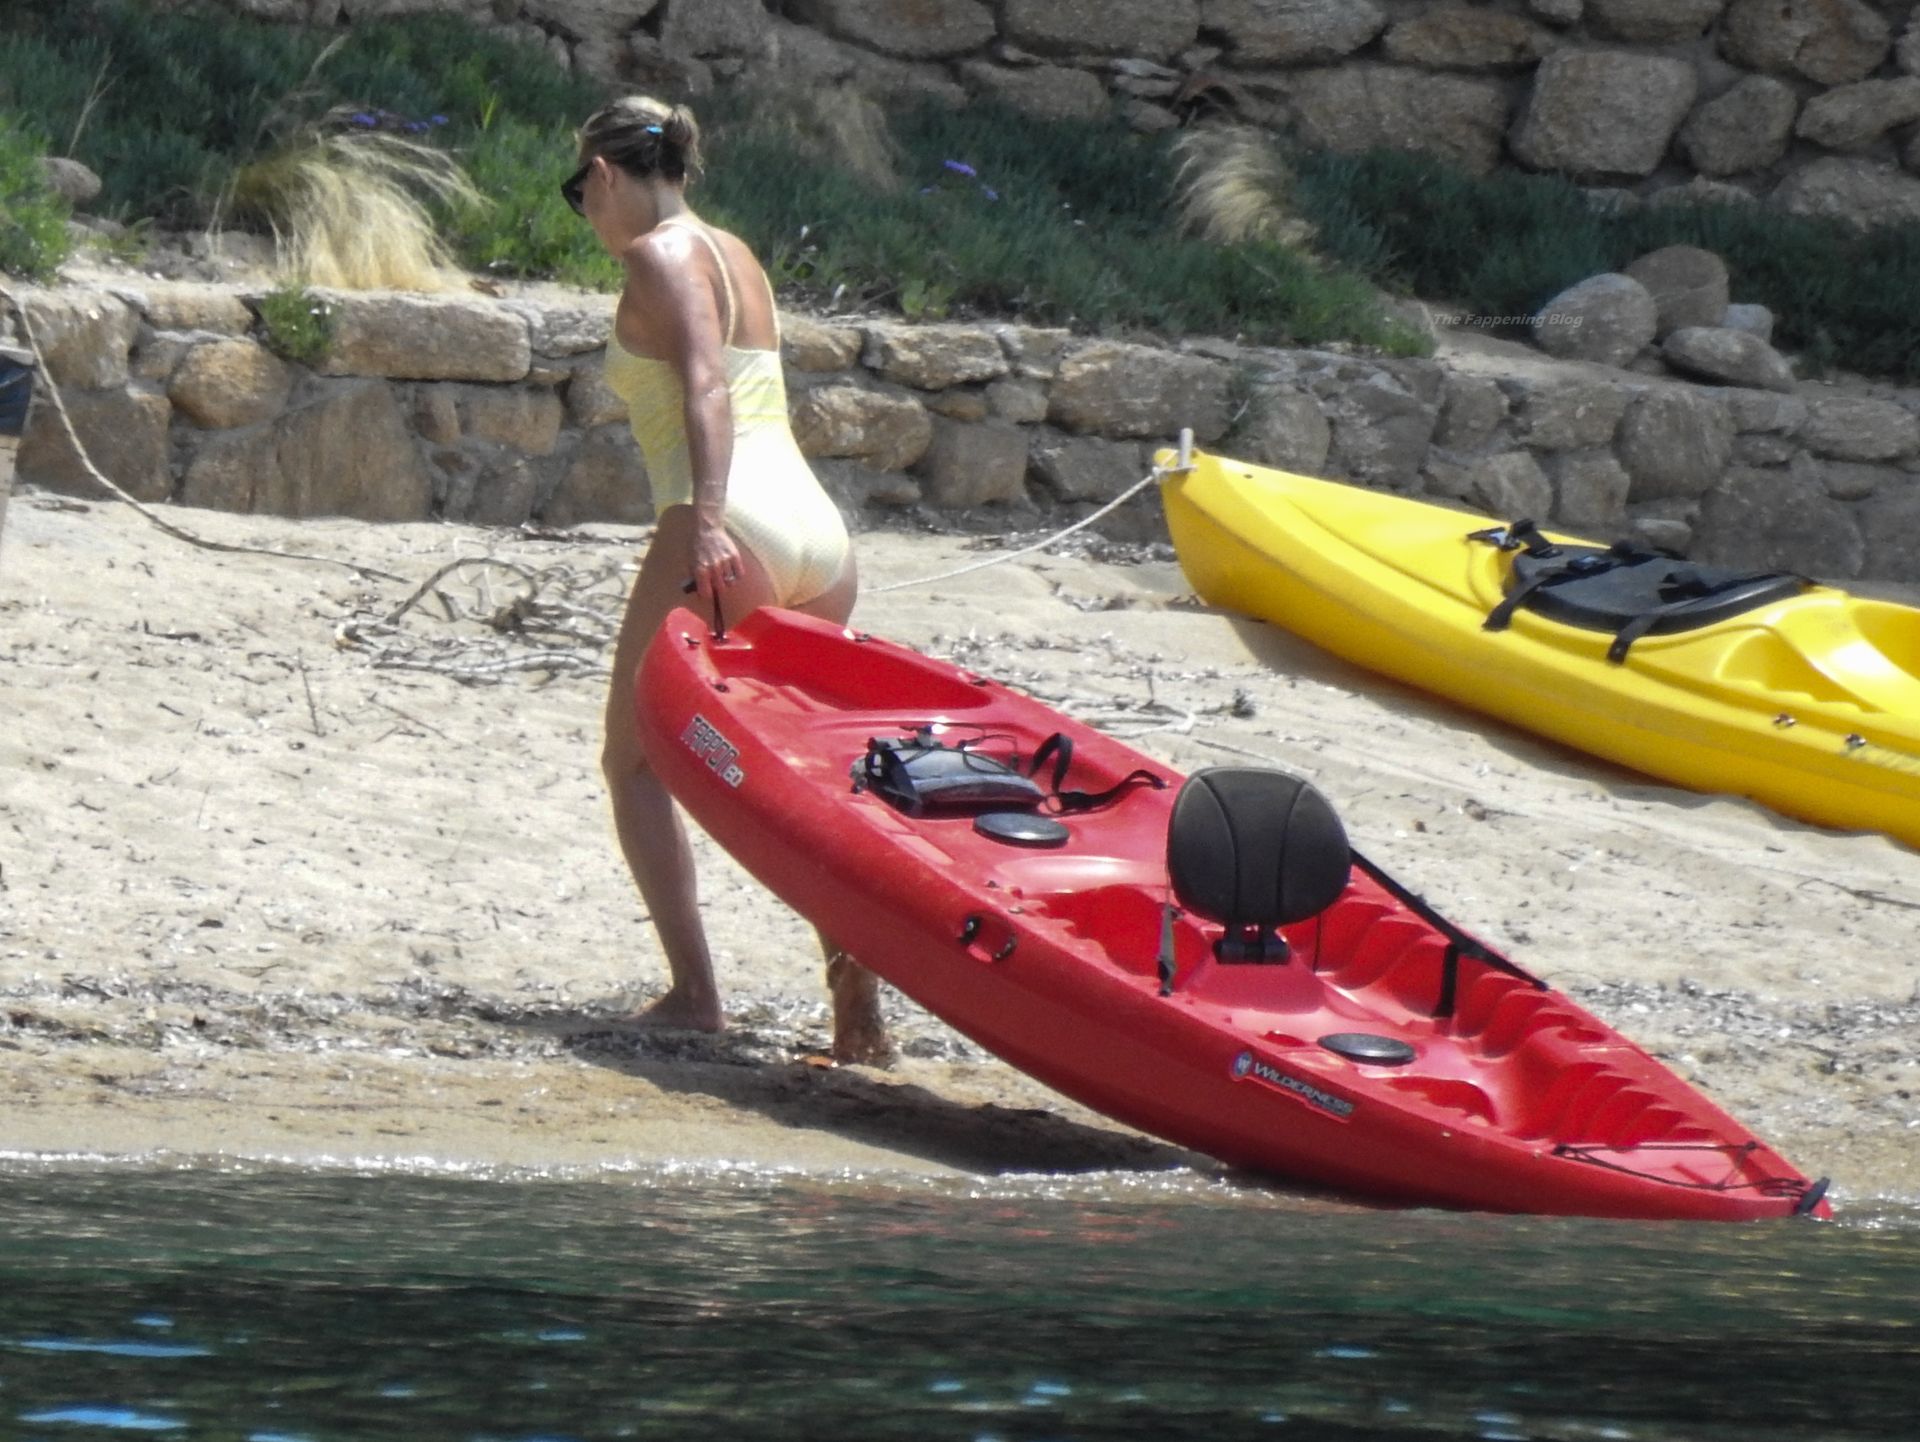 Kate Hudson & Danny Fujikawa Enjoy Their Vacation in Greece (43 Photos)